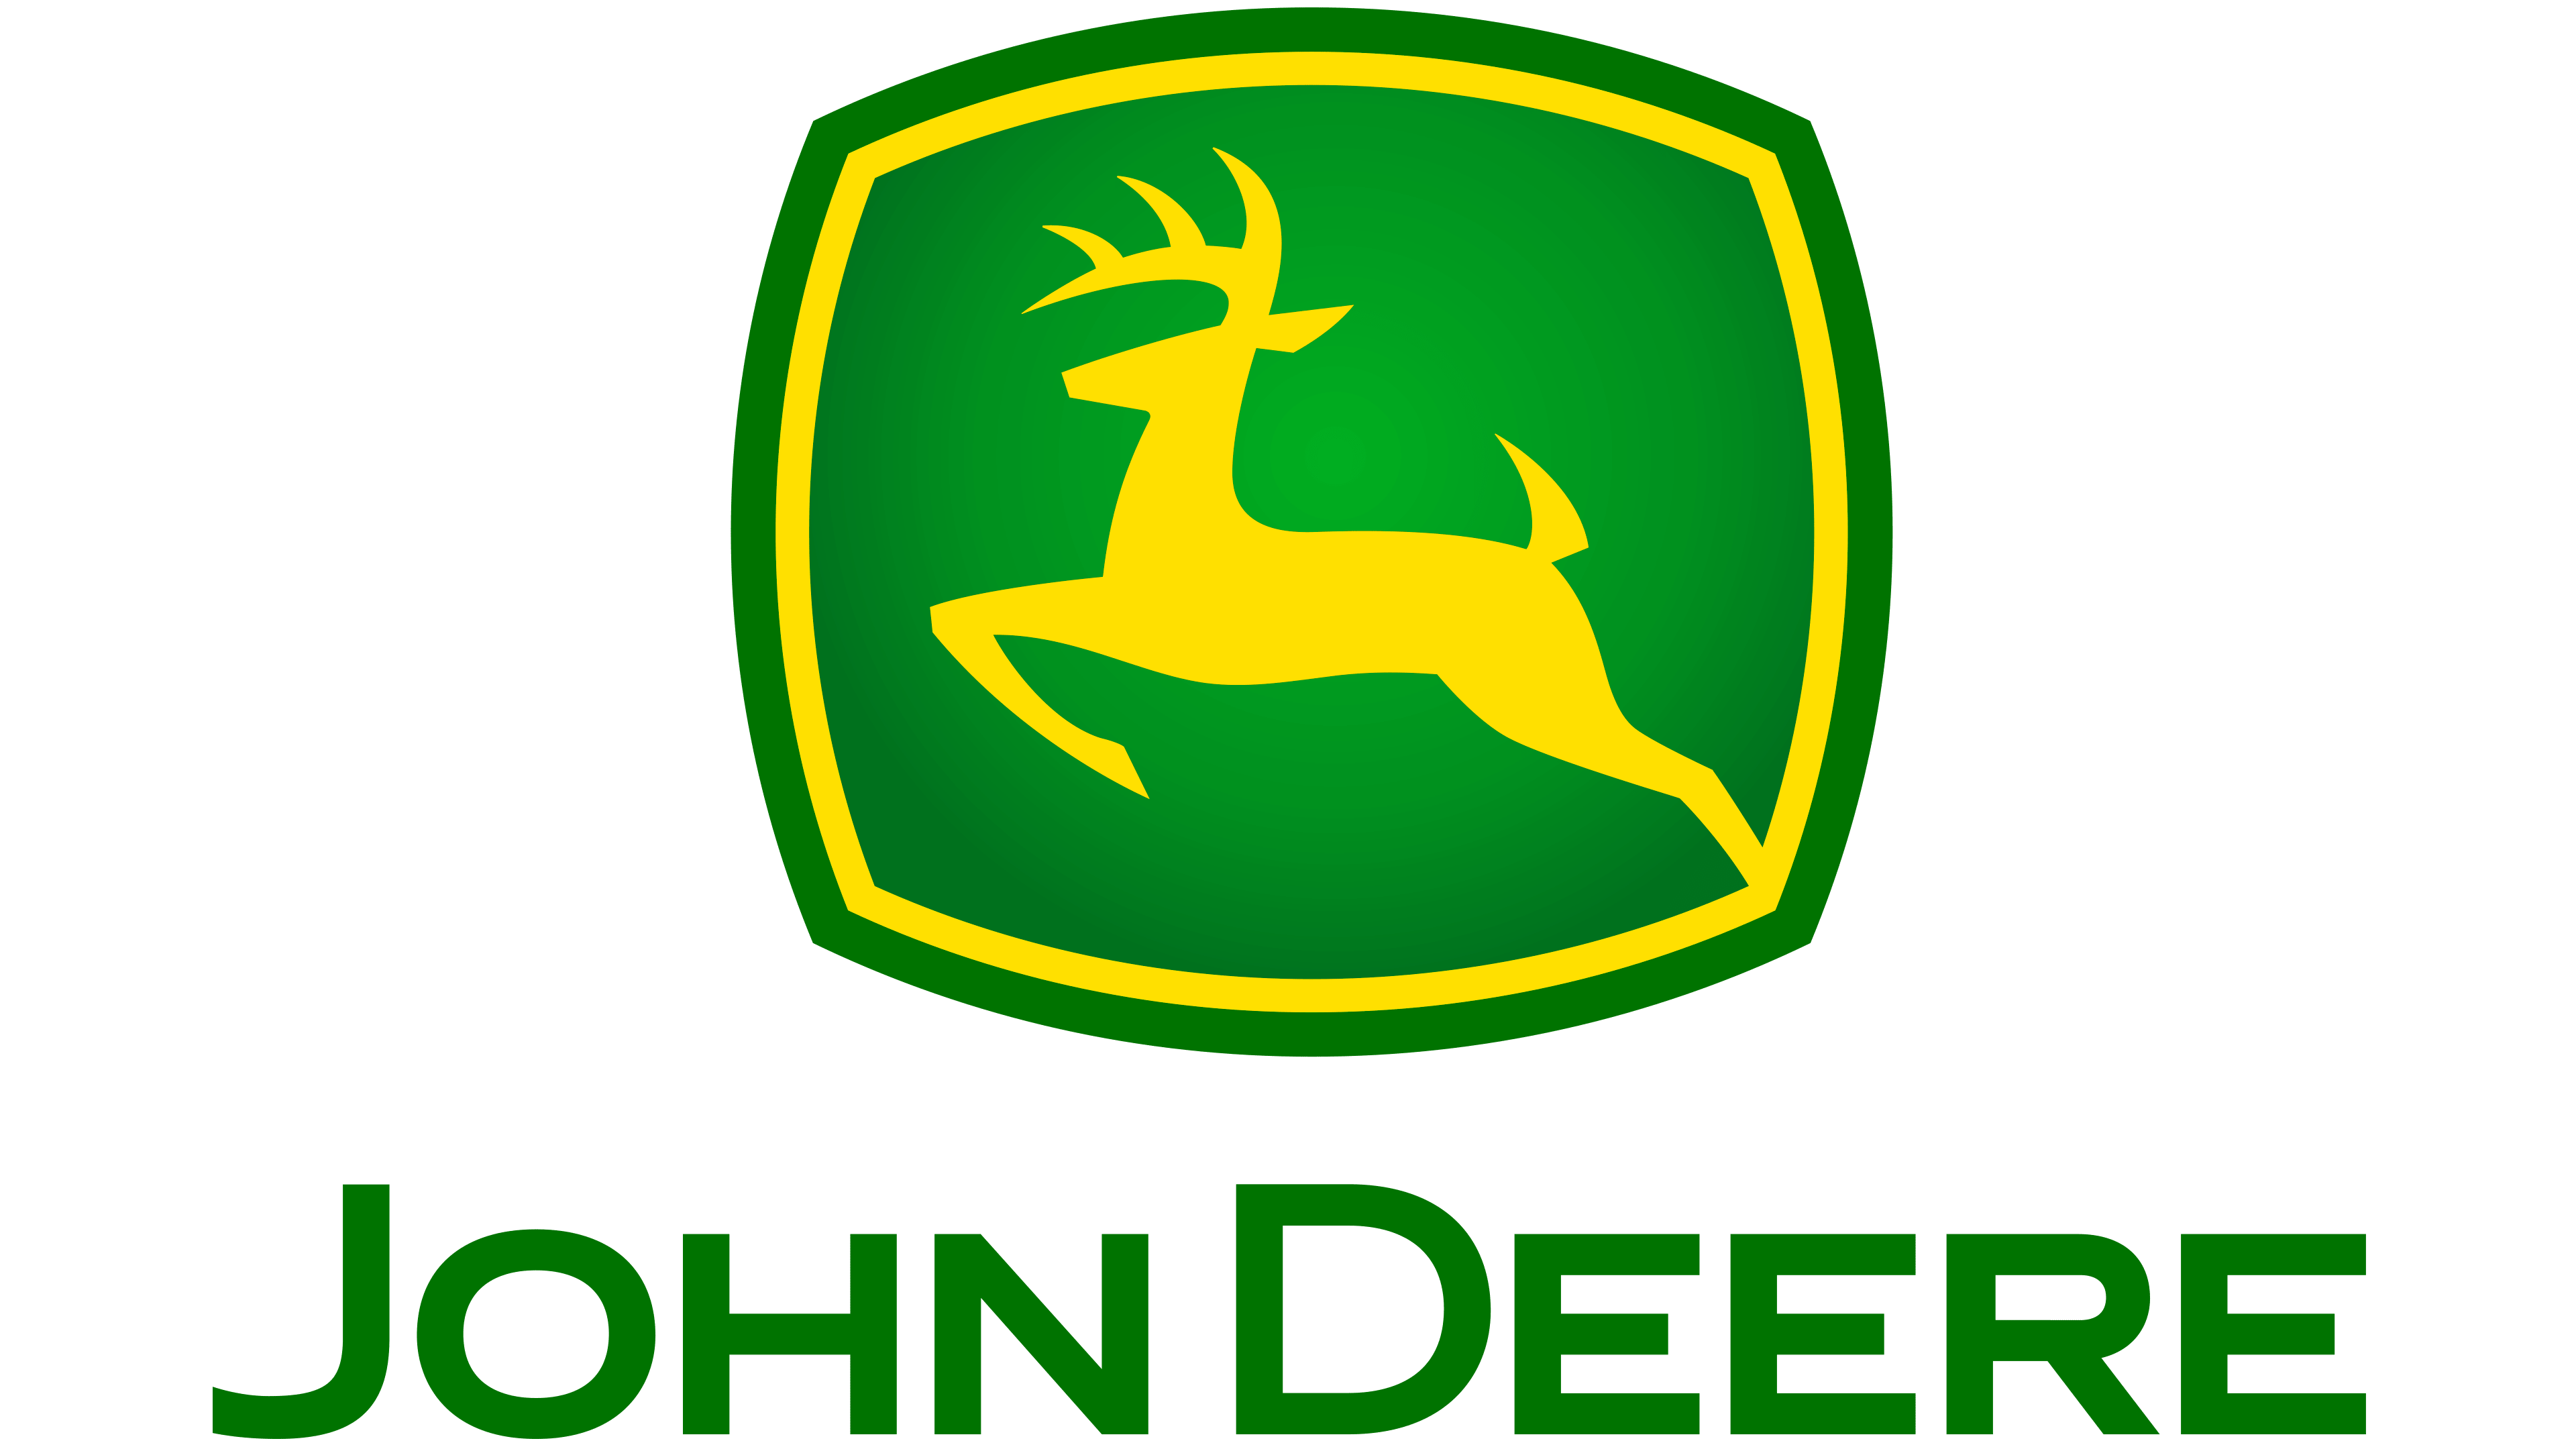 History Of All Logos All John Deere Logos - vrogue.co